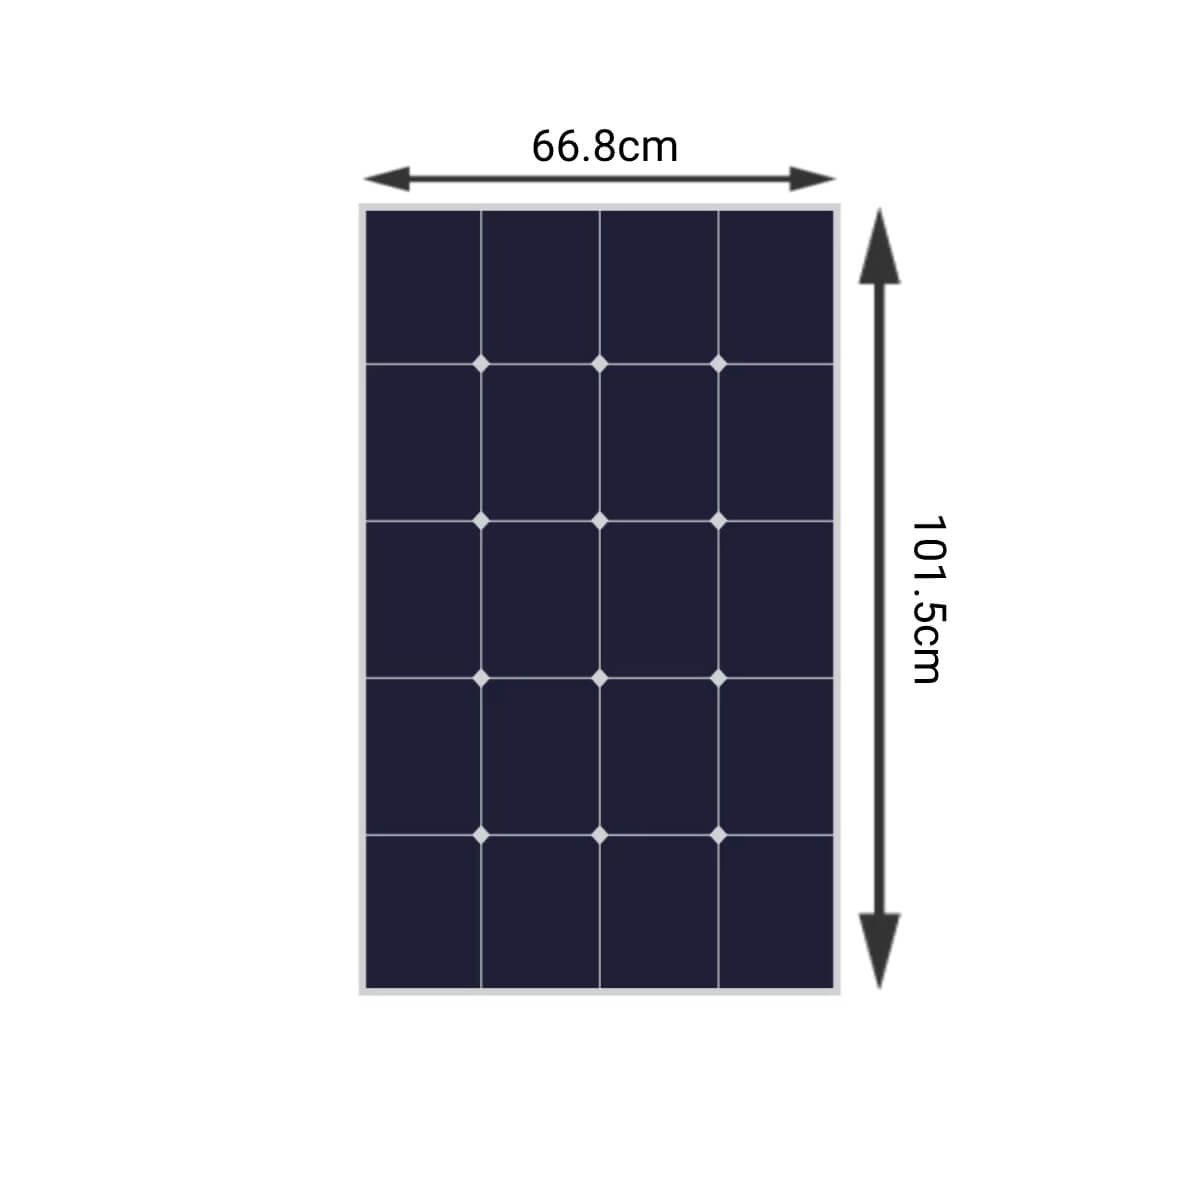 230W Solar Panel Kit – 2x 115W dimensions